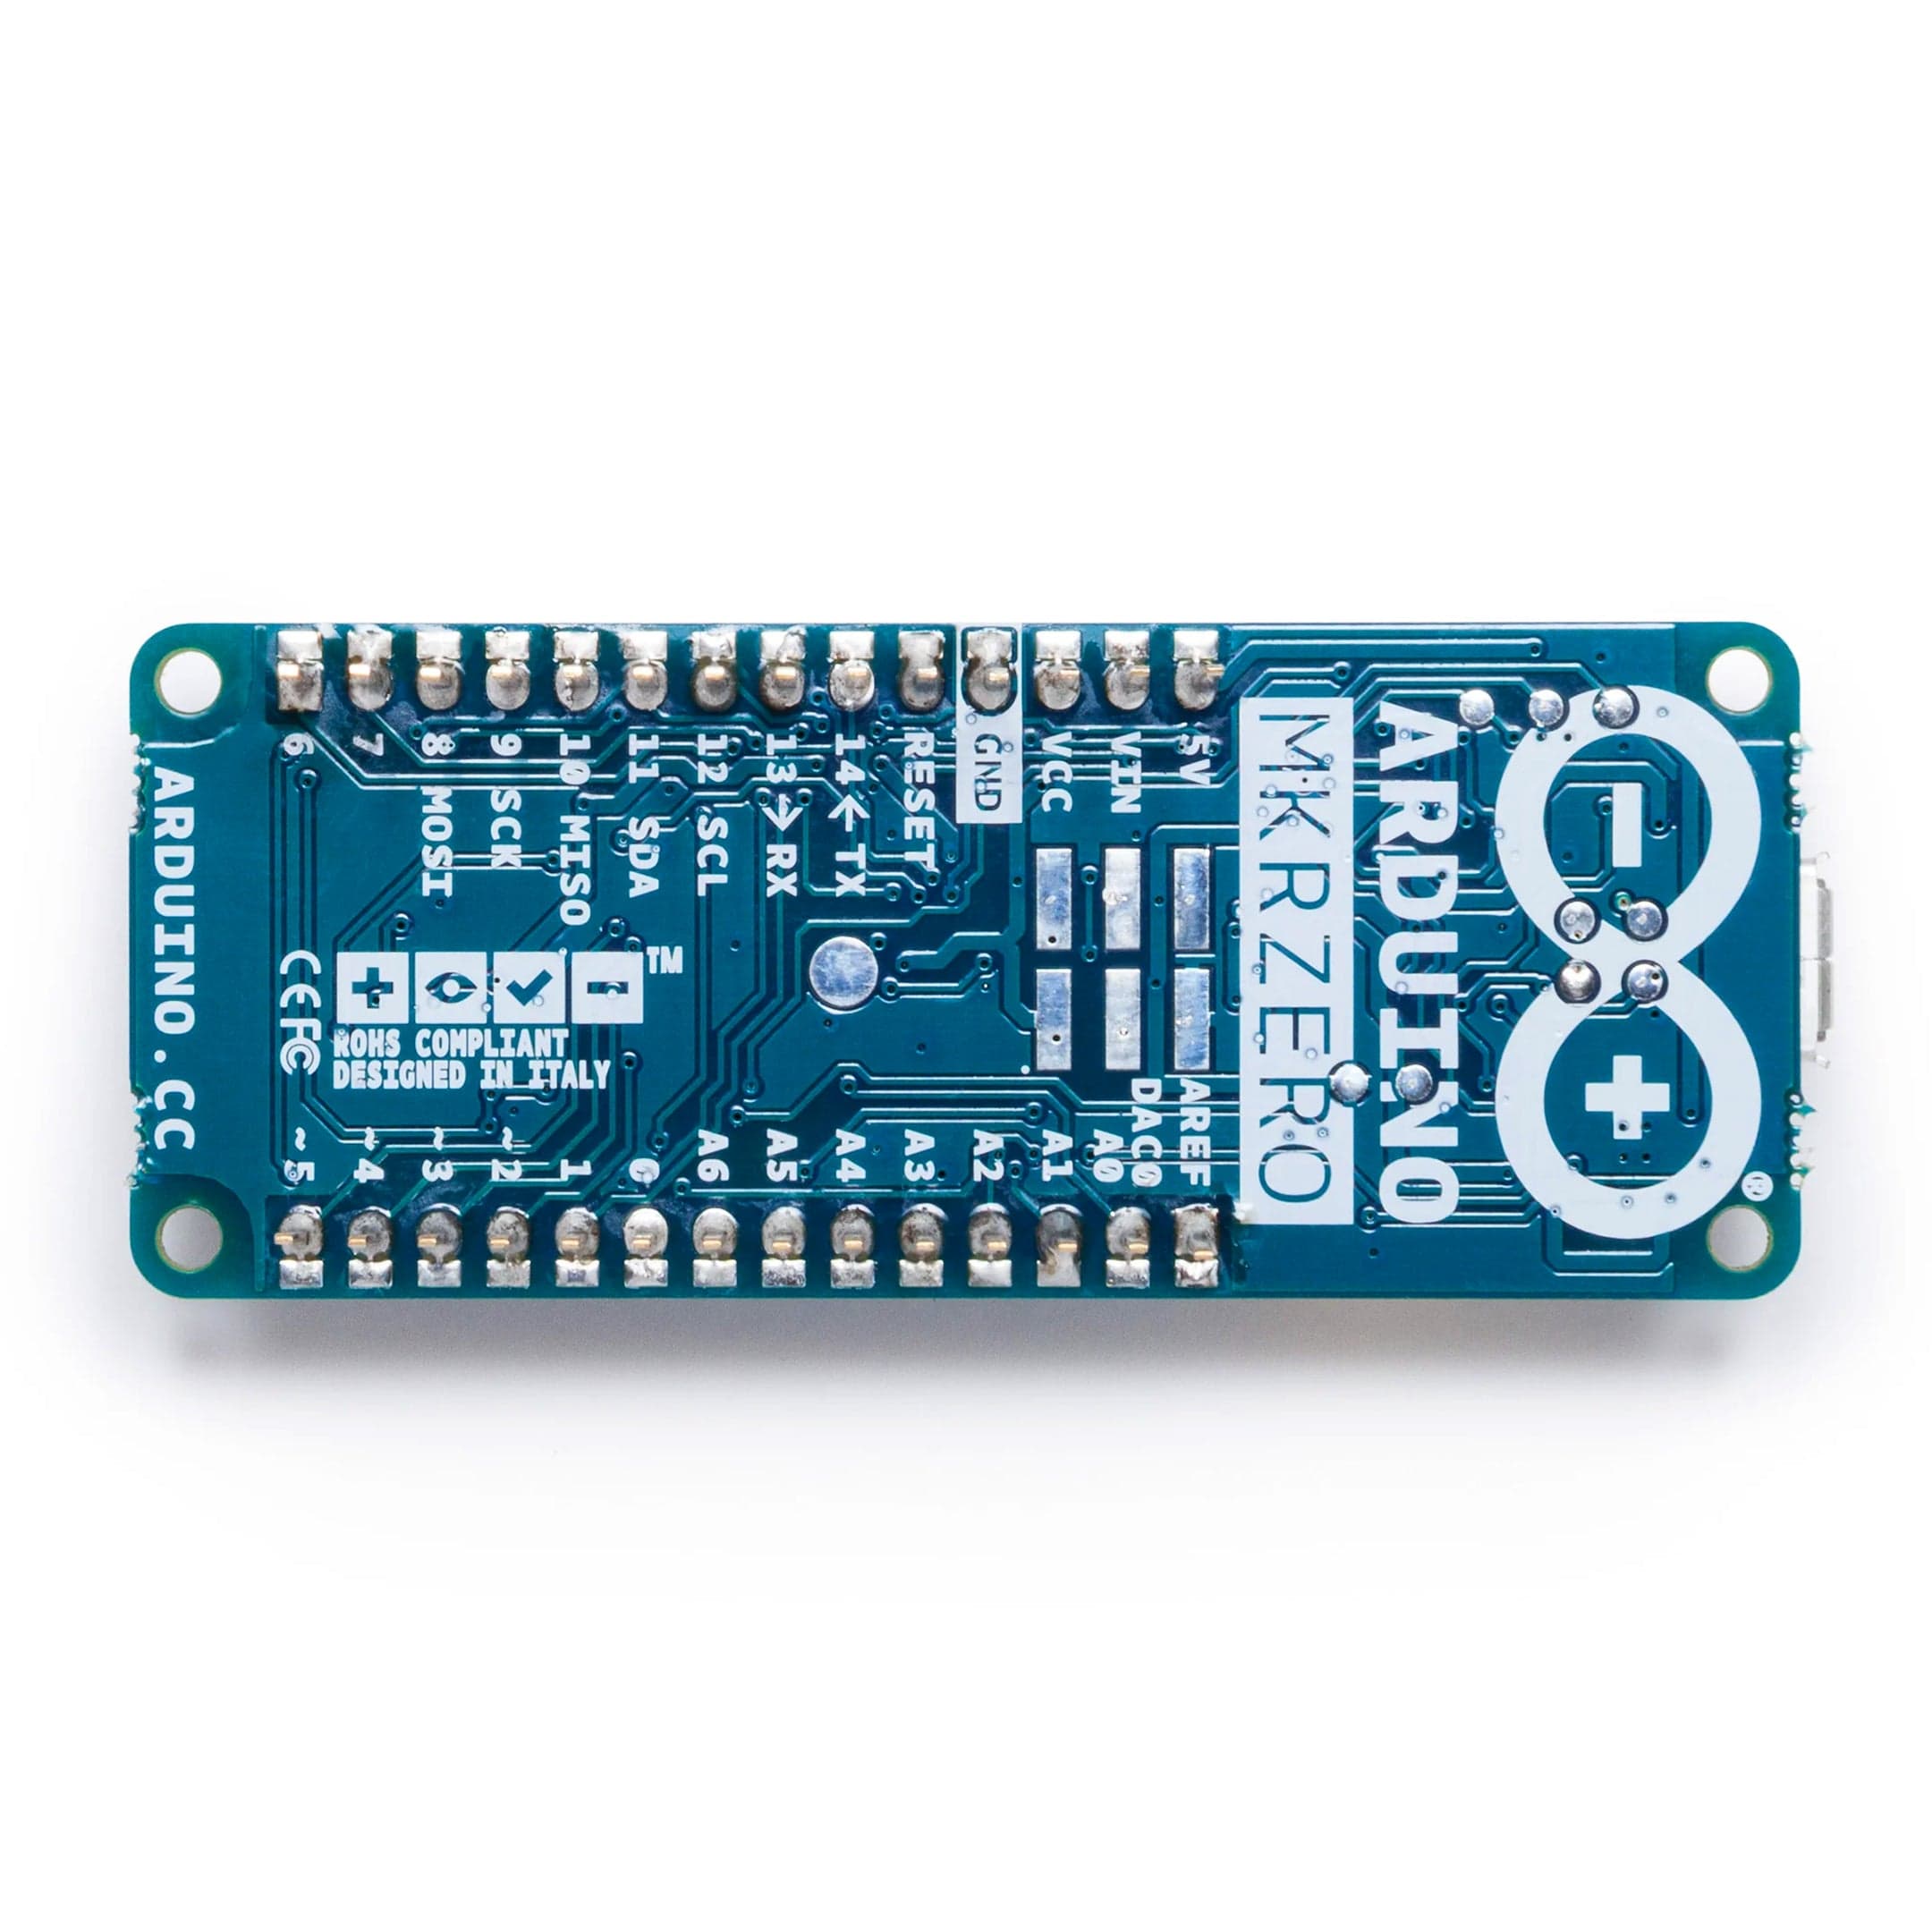 Arduino MKR Zero - The Pi Hut